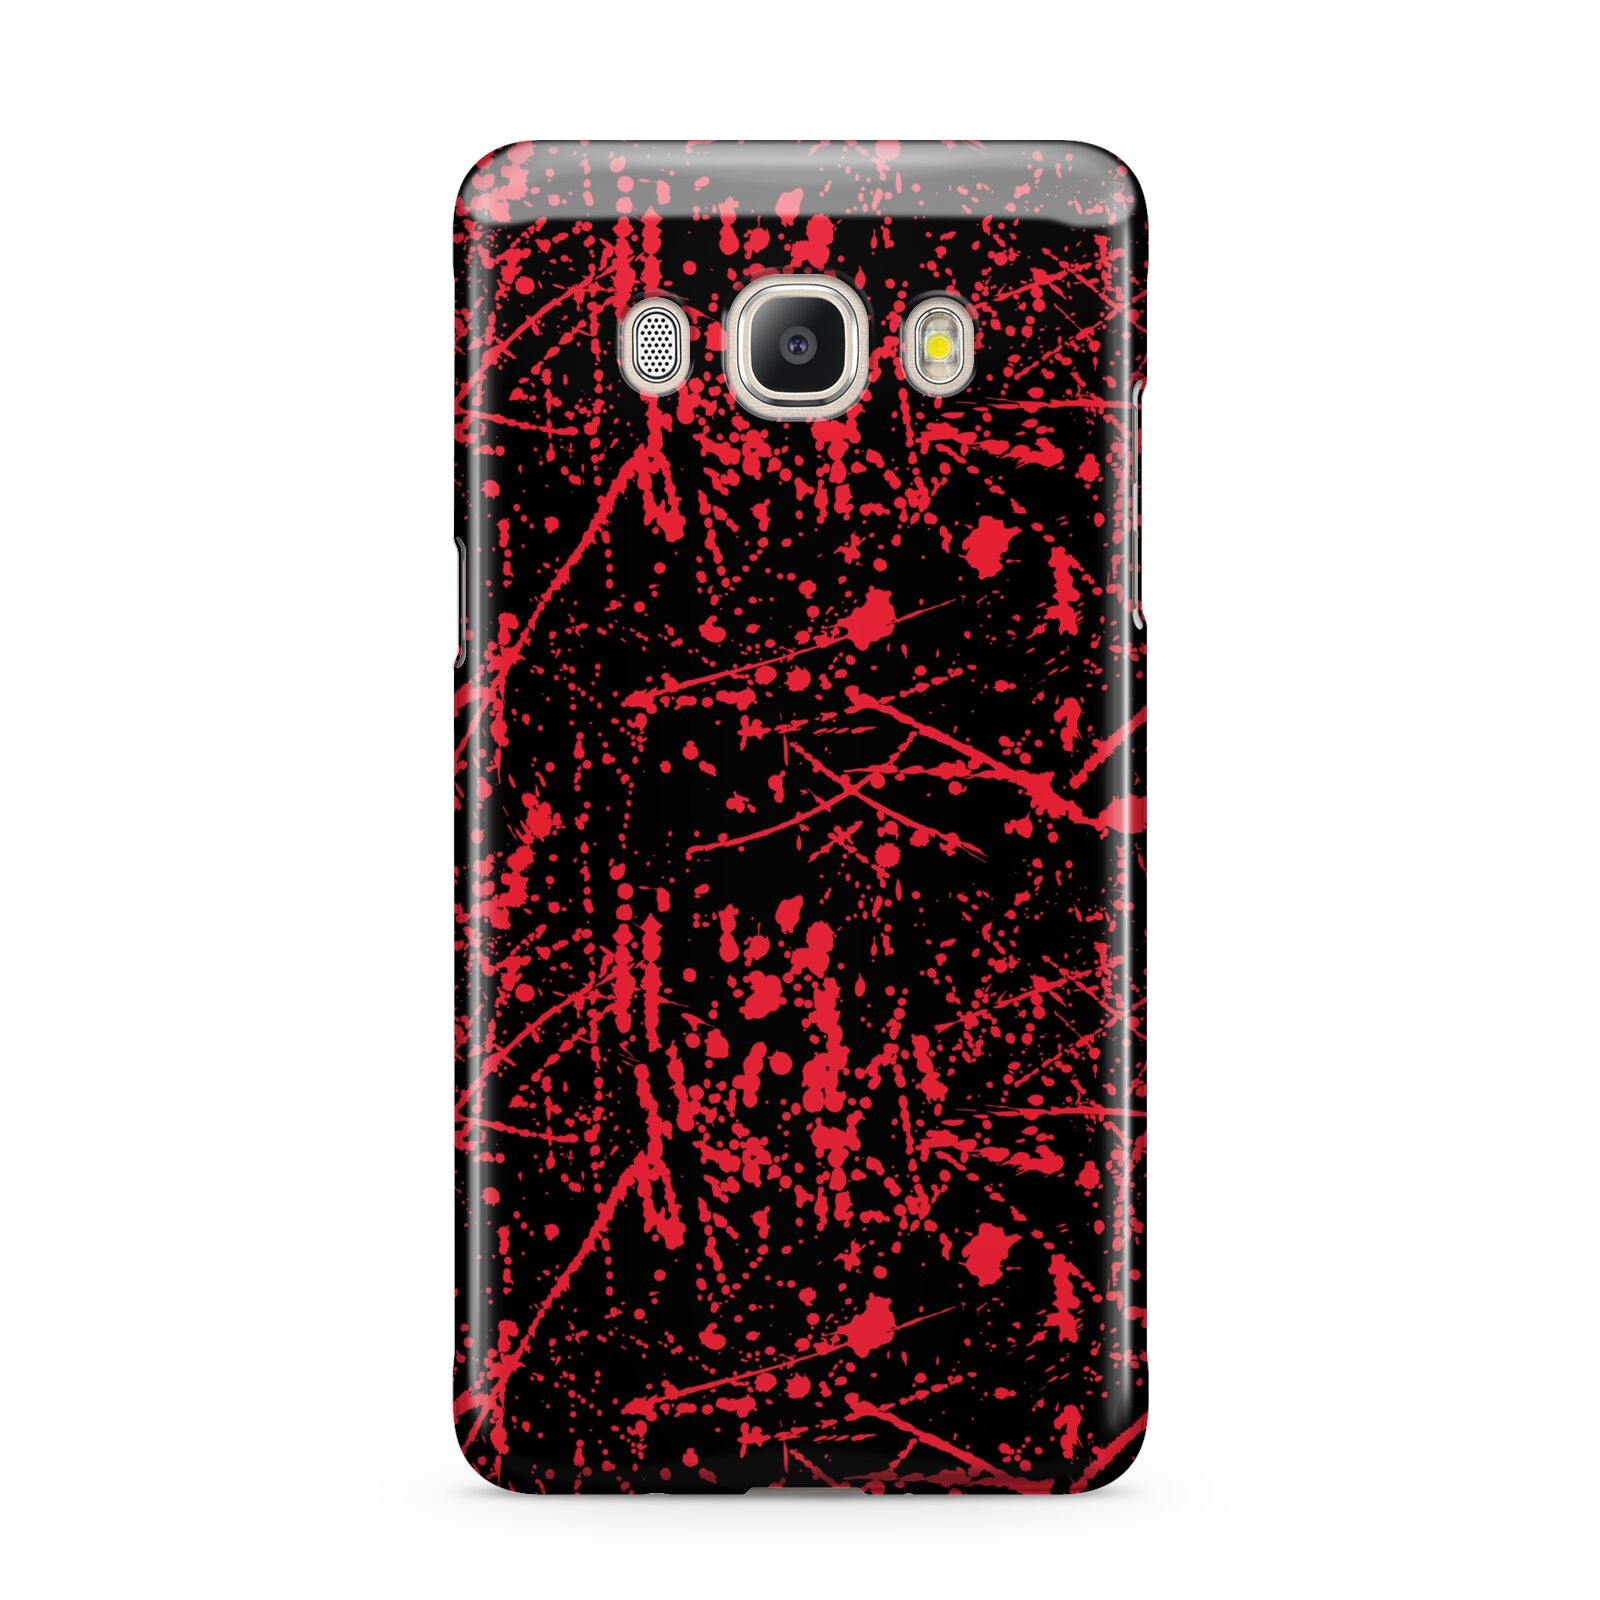 Blood Splatters Samsung Galaxy J5 2016 Case